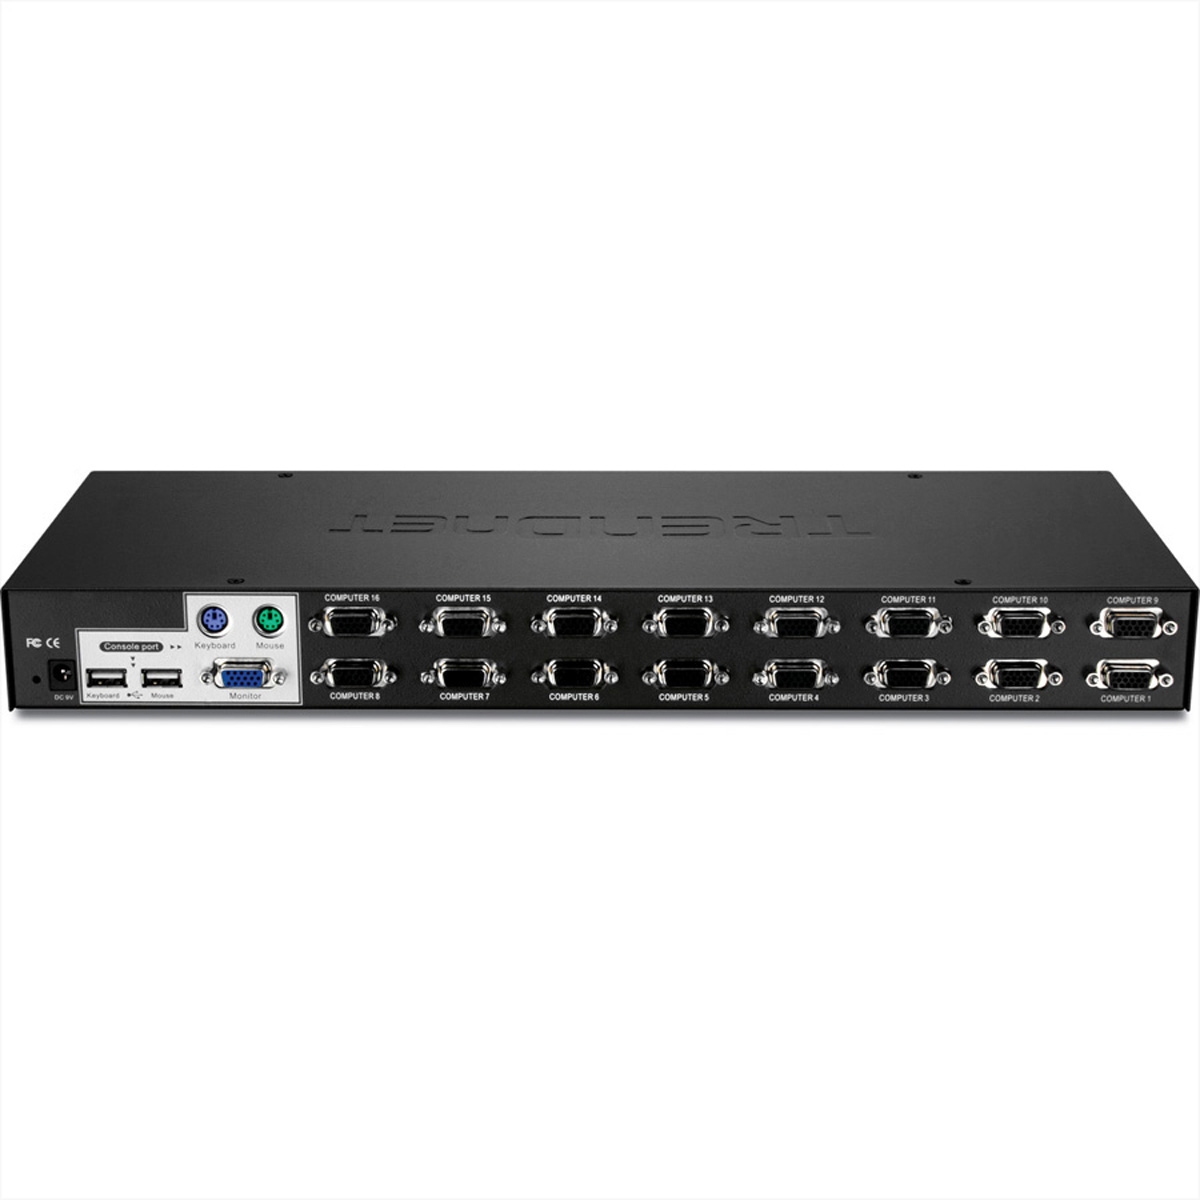 Rack TRENDNET Switch KVM USB/PS/2 Tastatur/Video/Maus 16-Port Mount TK-1603R (KVM)-Switches